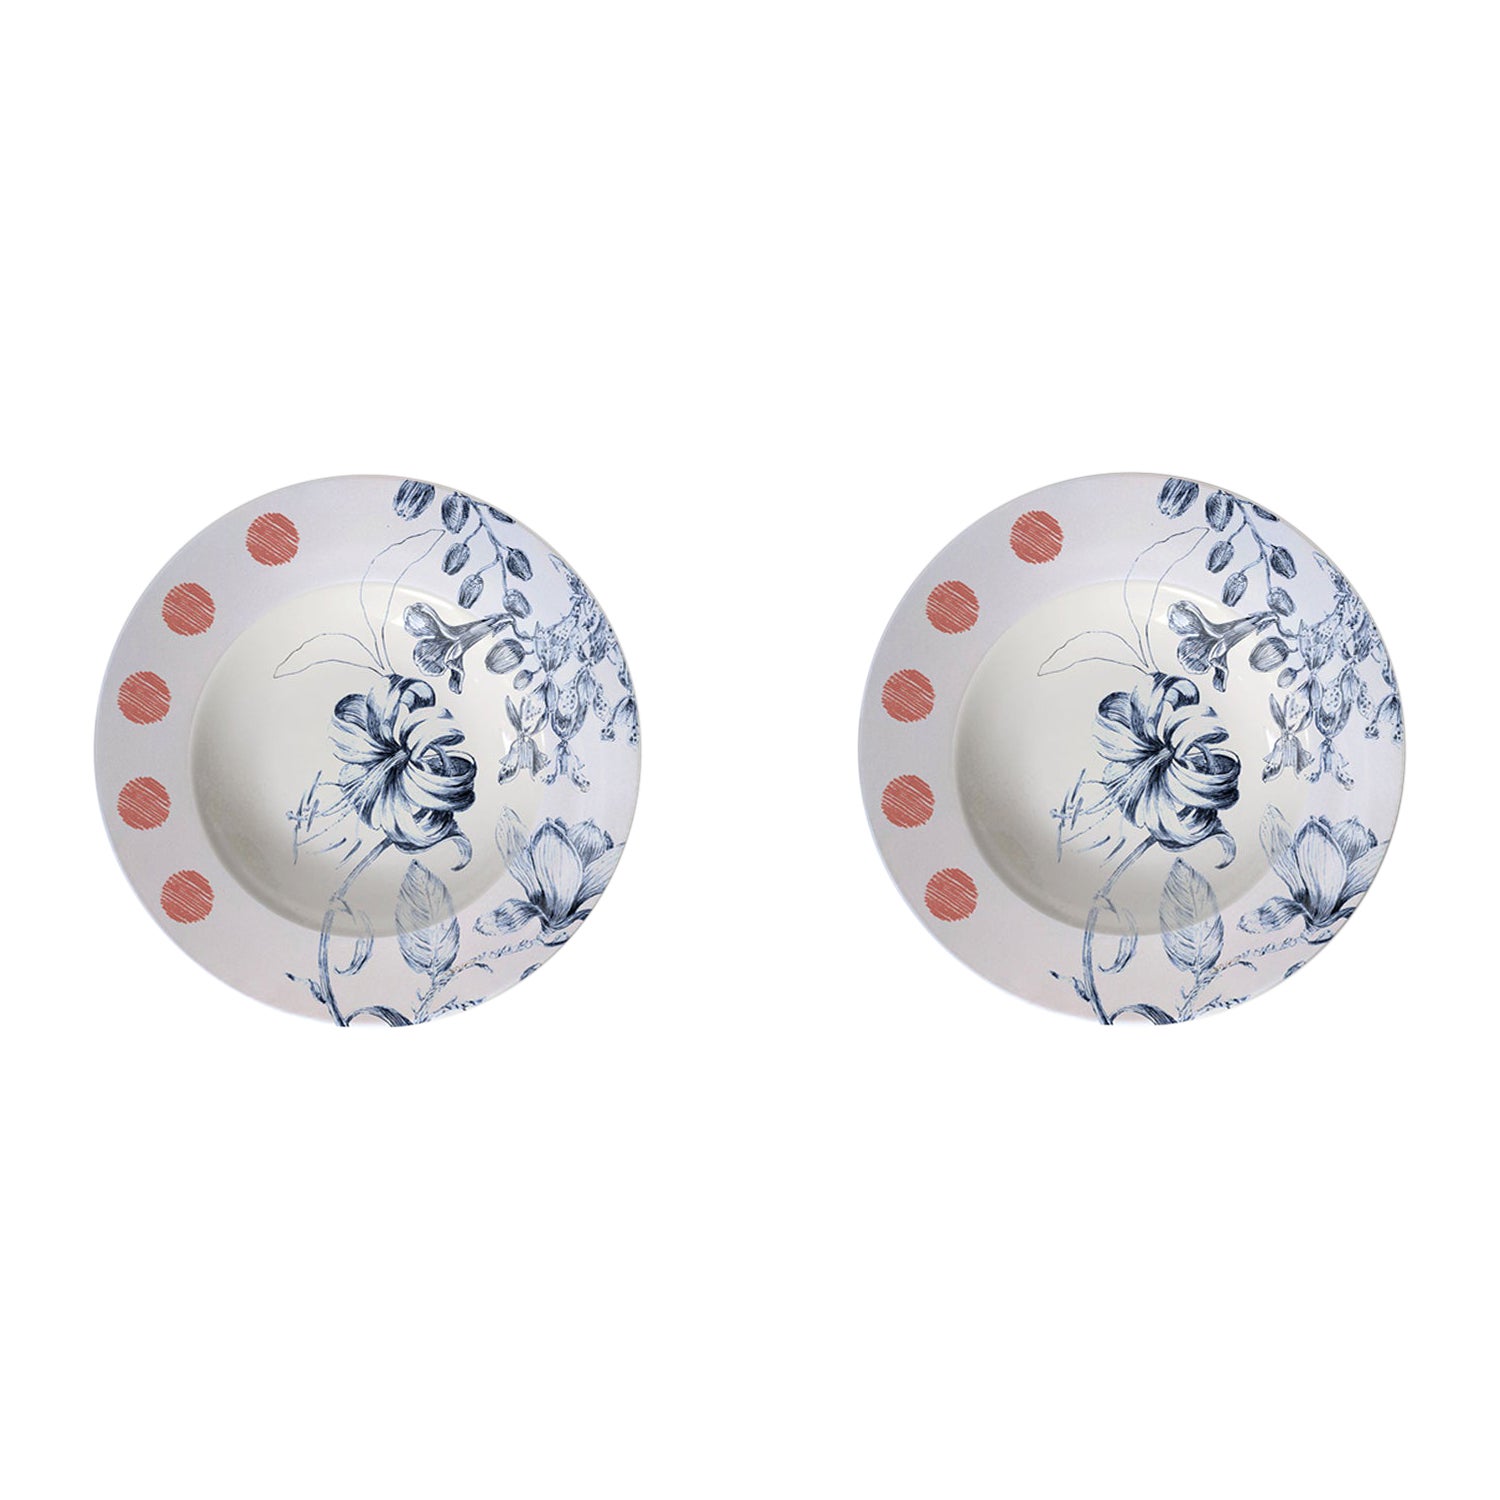 Marie Antoinette, Contemporary Porcelain Pasta Plates Set with Floral Design